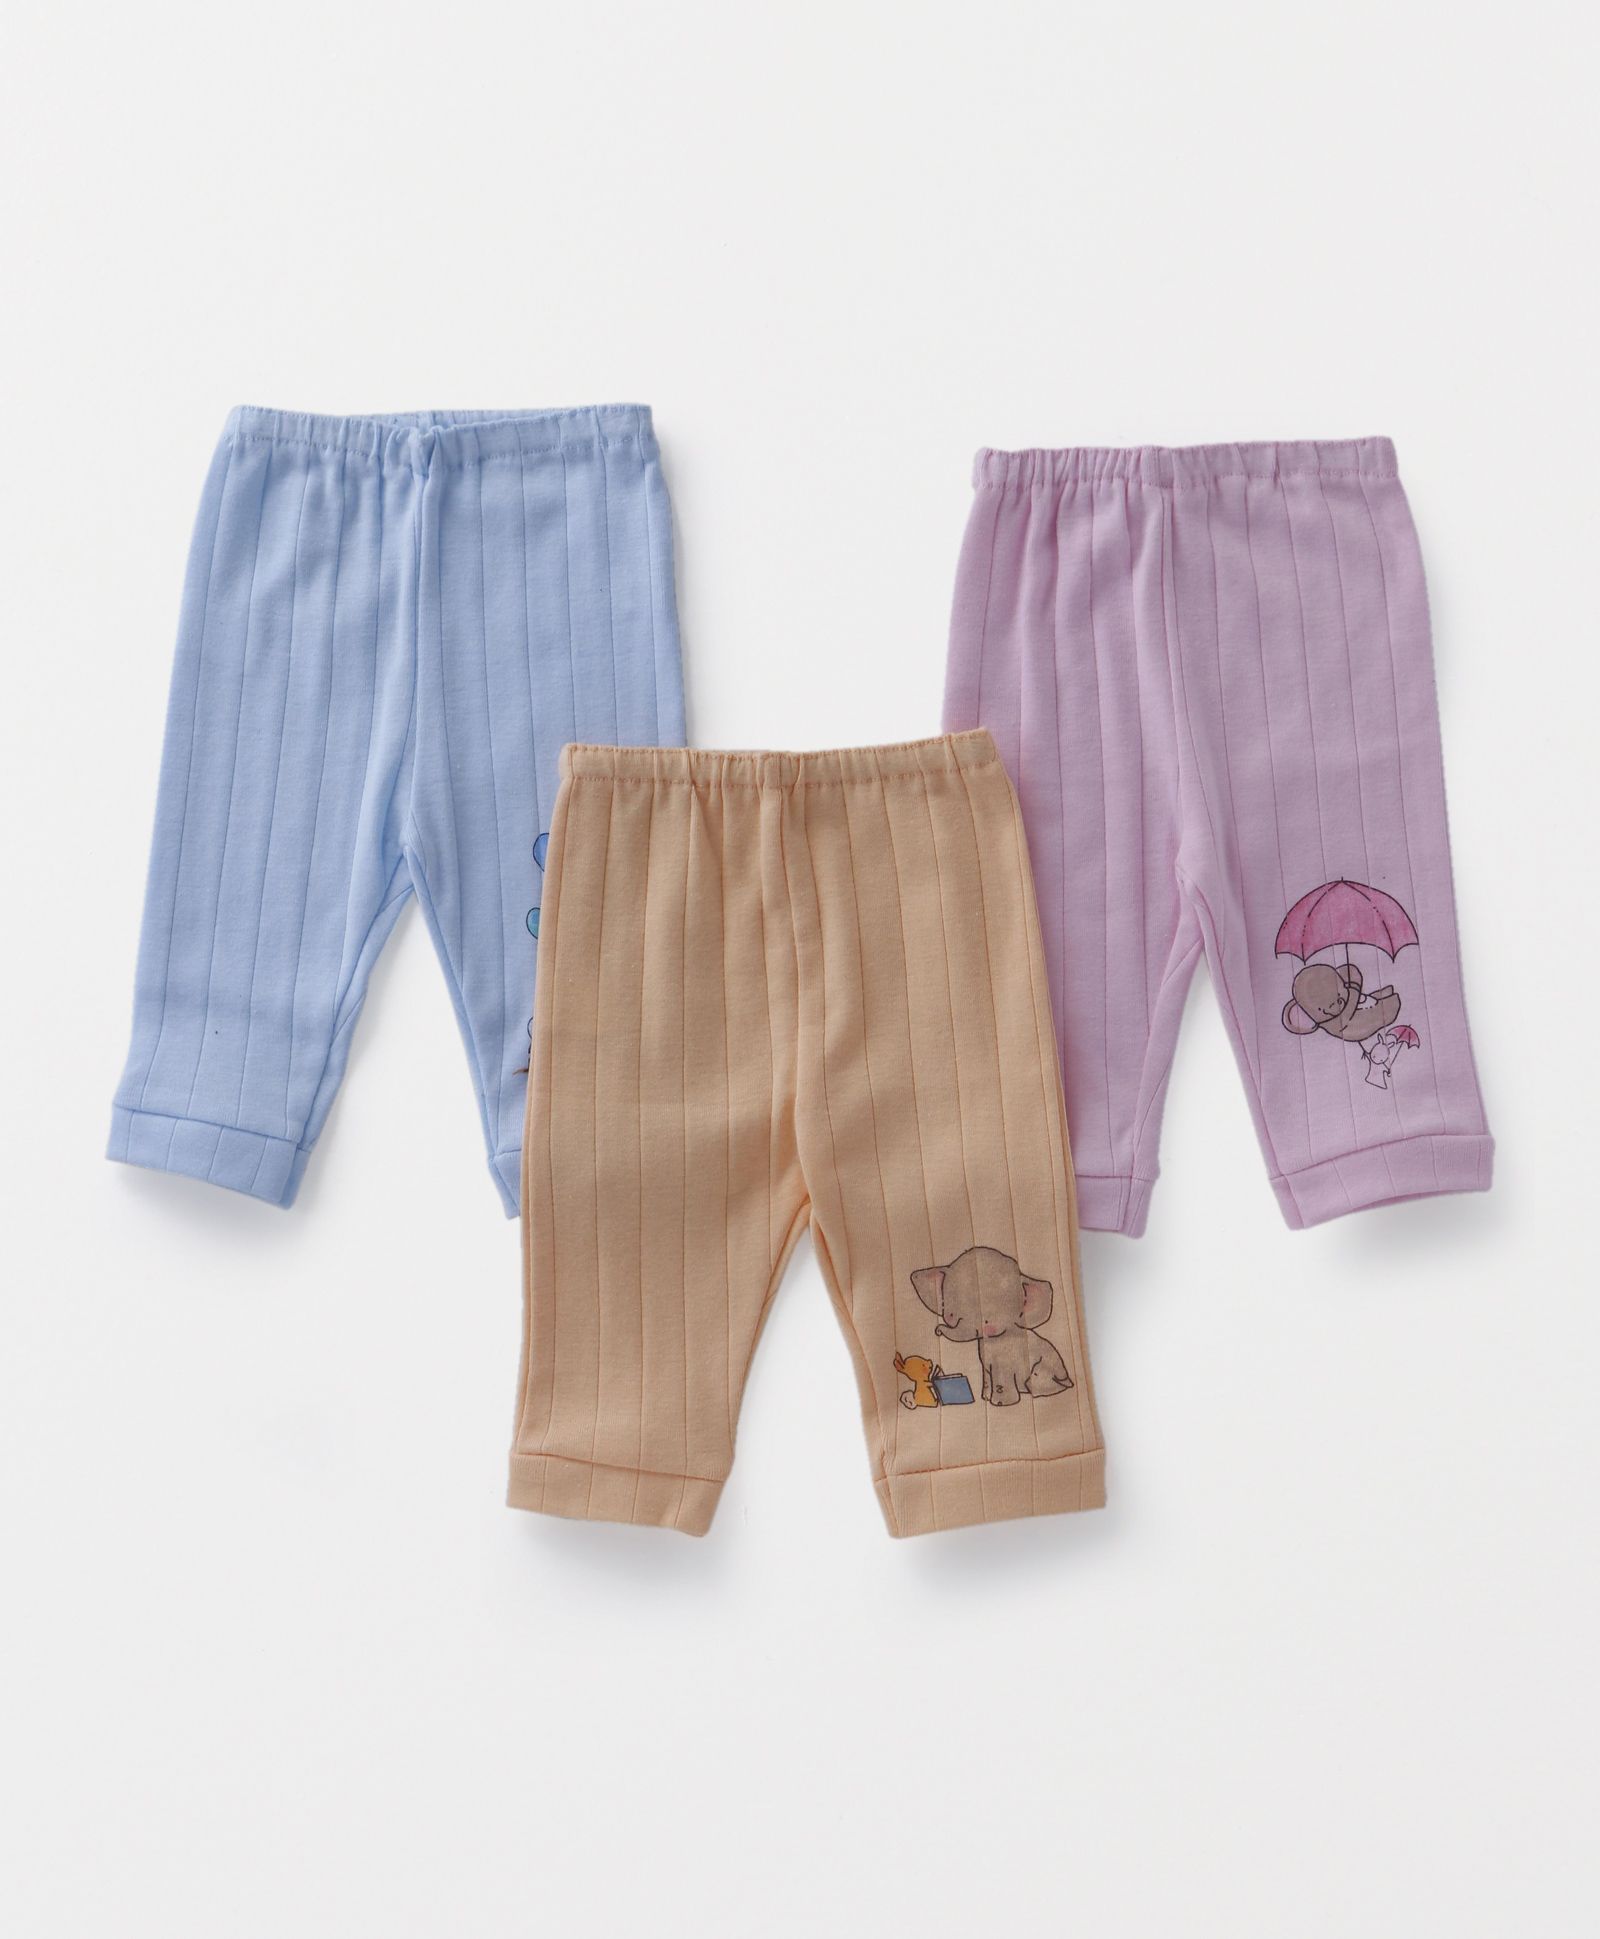 Full Lounge Pants for Babies Boys Girls Infants